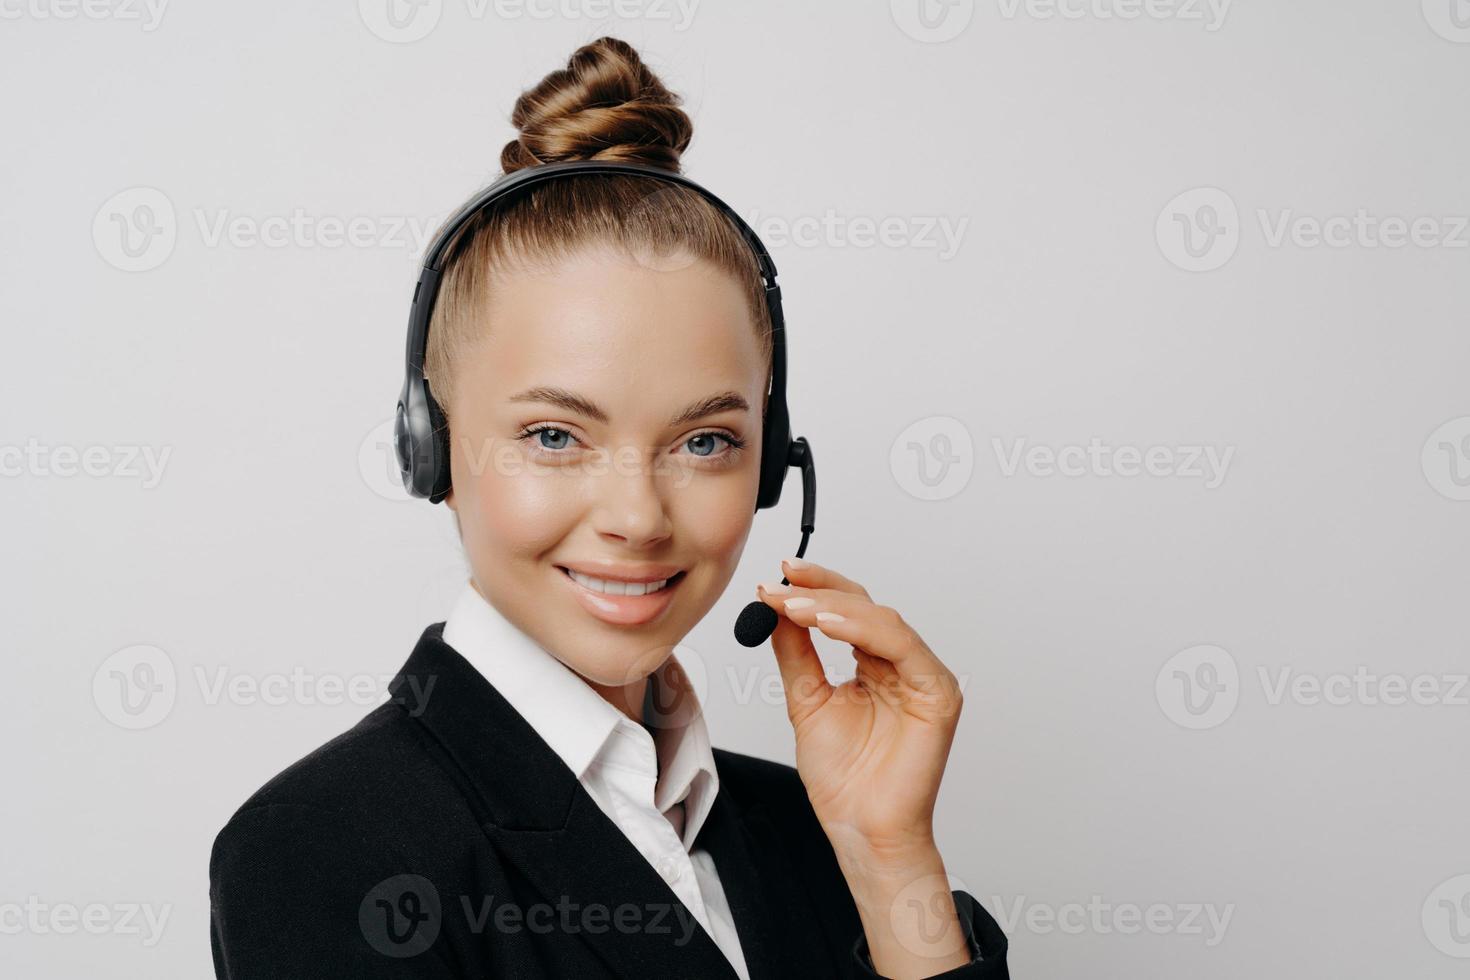 Female speaker with dark suit adjsting mic on headset photo